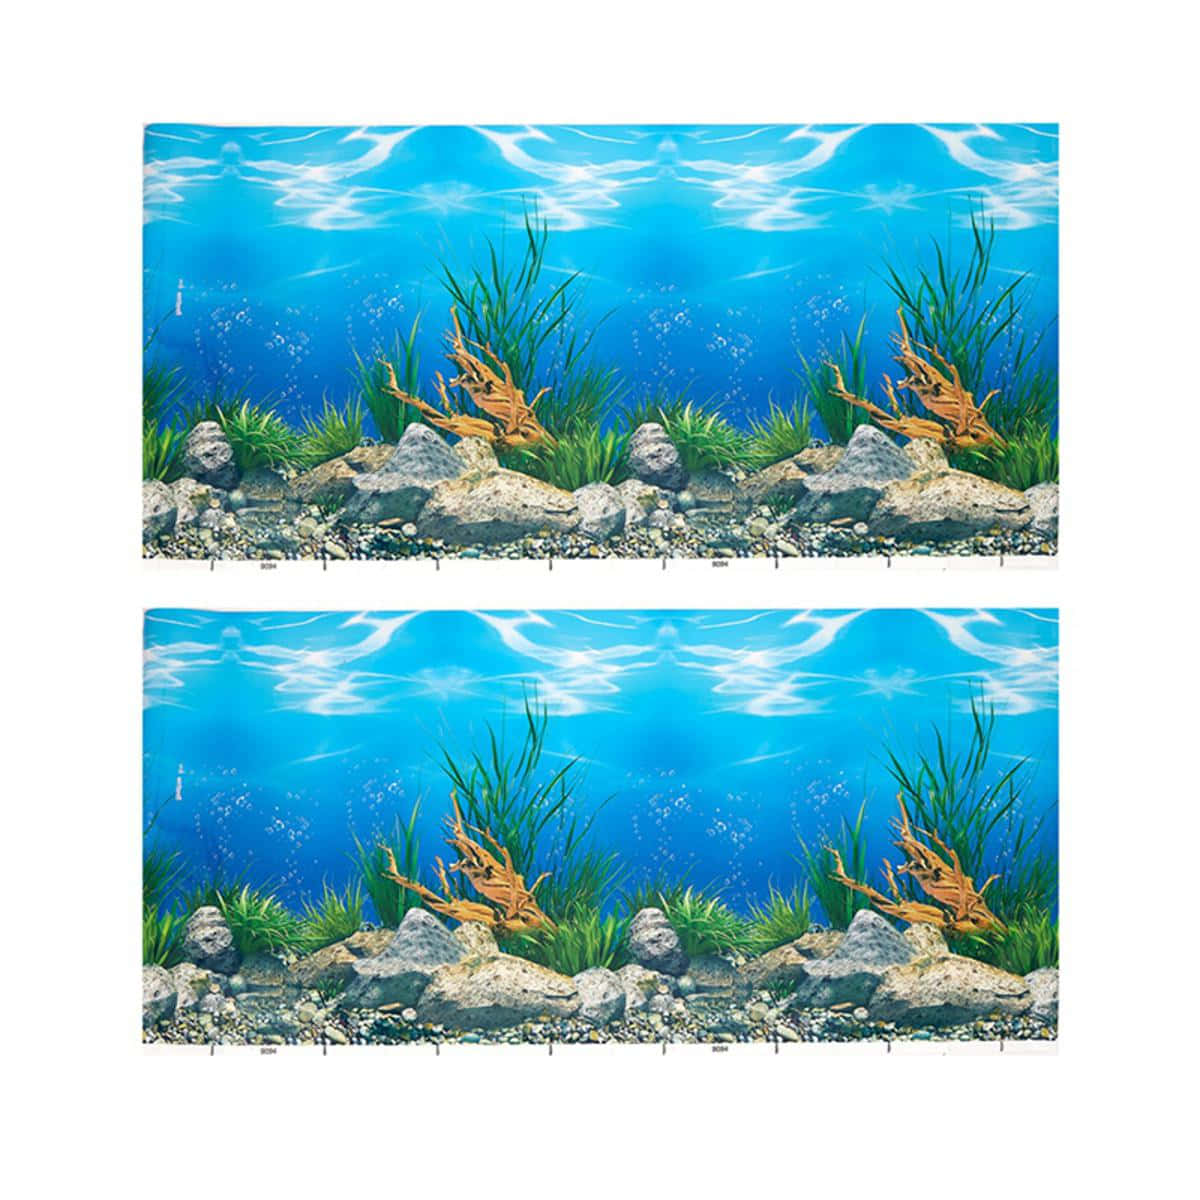 Download Vibrant Underwater Aquarium World Wallpaper | Wallpapers.com